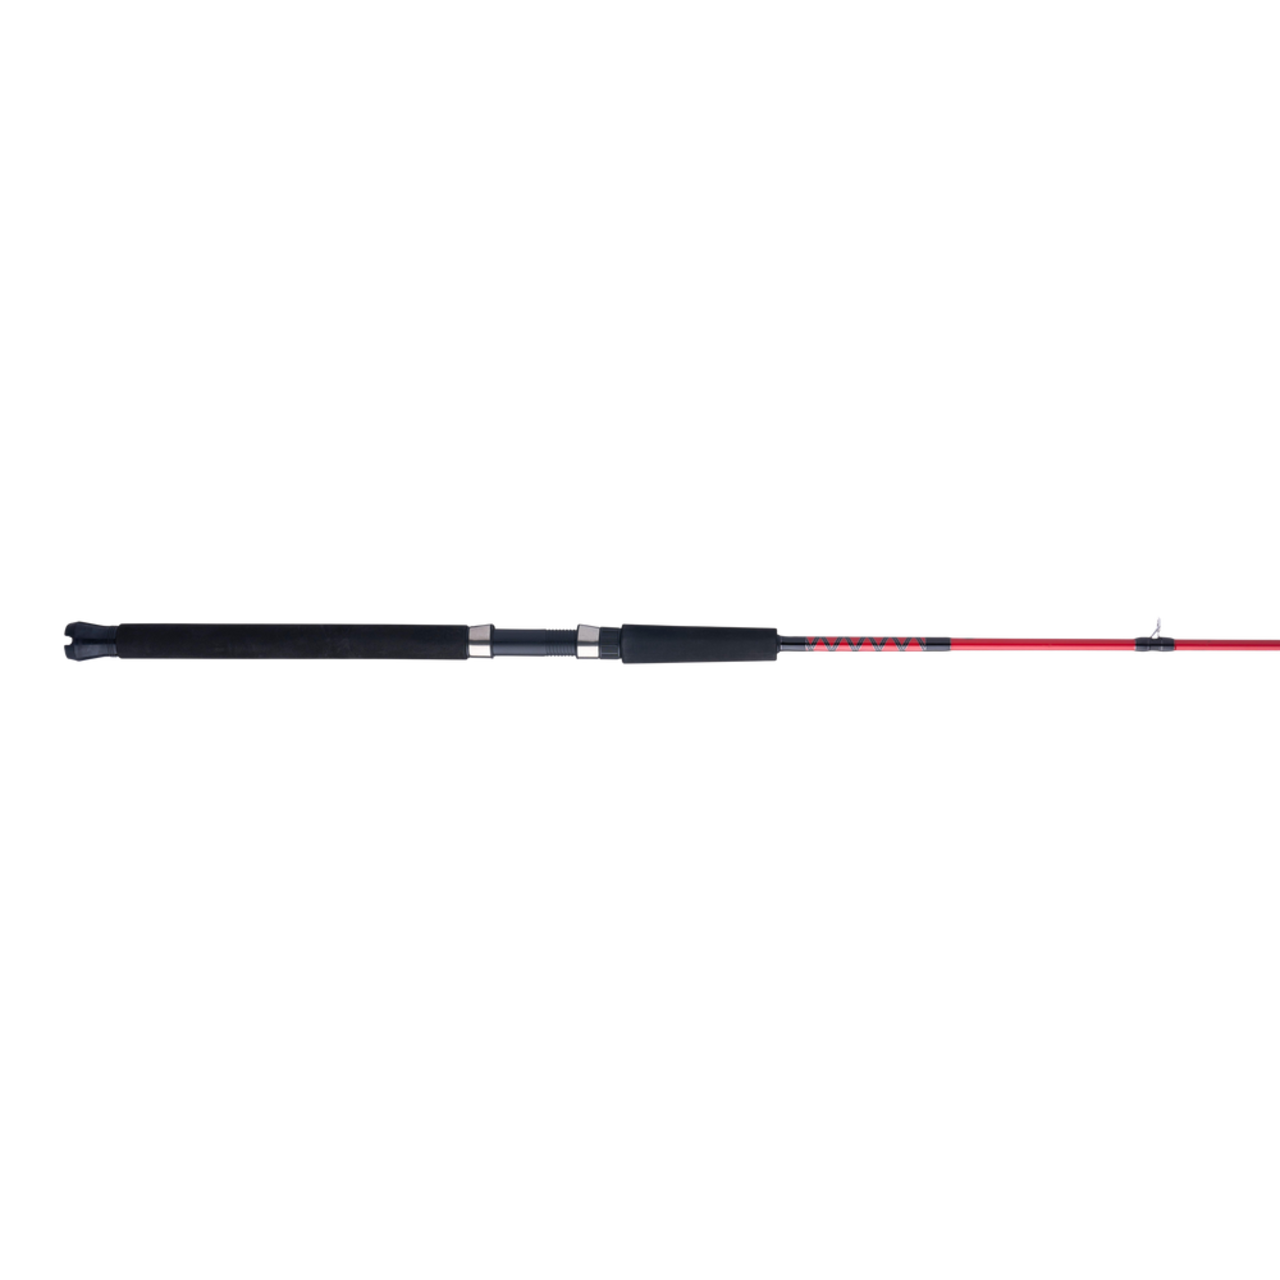 PENN® Mariner® 3 Boat Conventional Trolling Fishing Rod, Light, 8